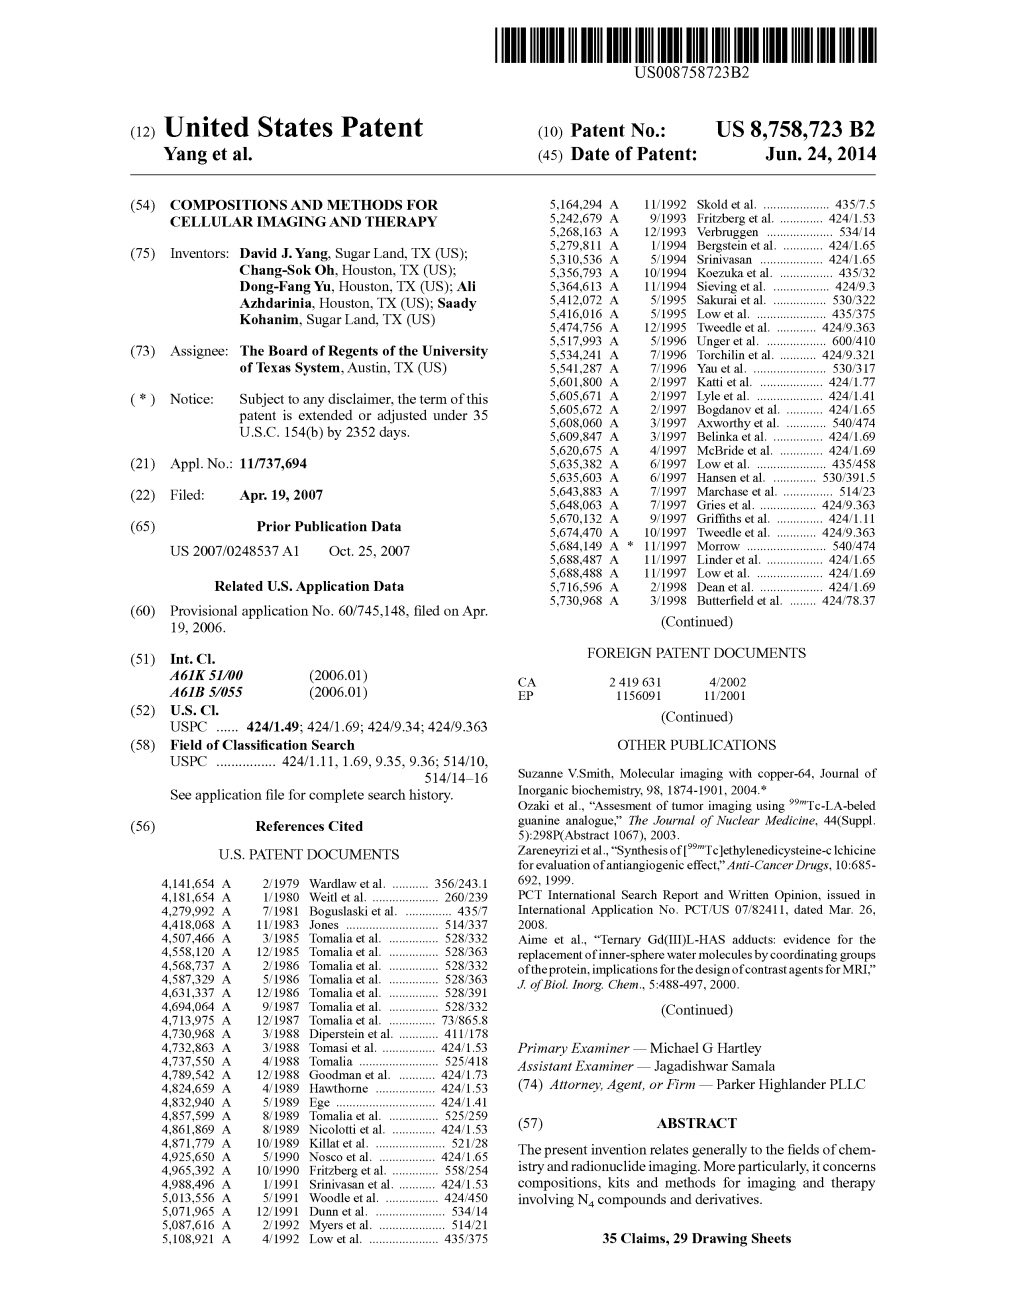 United States Patent (10) Patent No.: US 8,758,723 B2 Yang Et Al